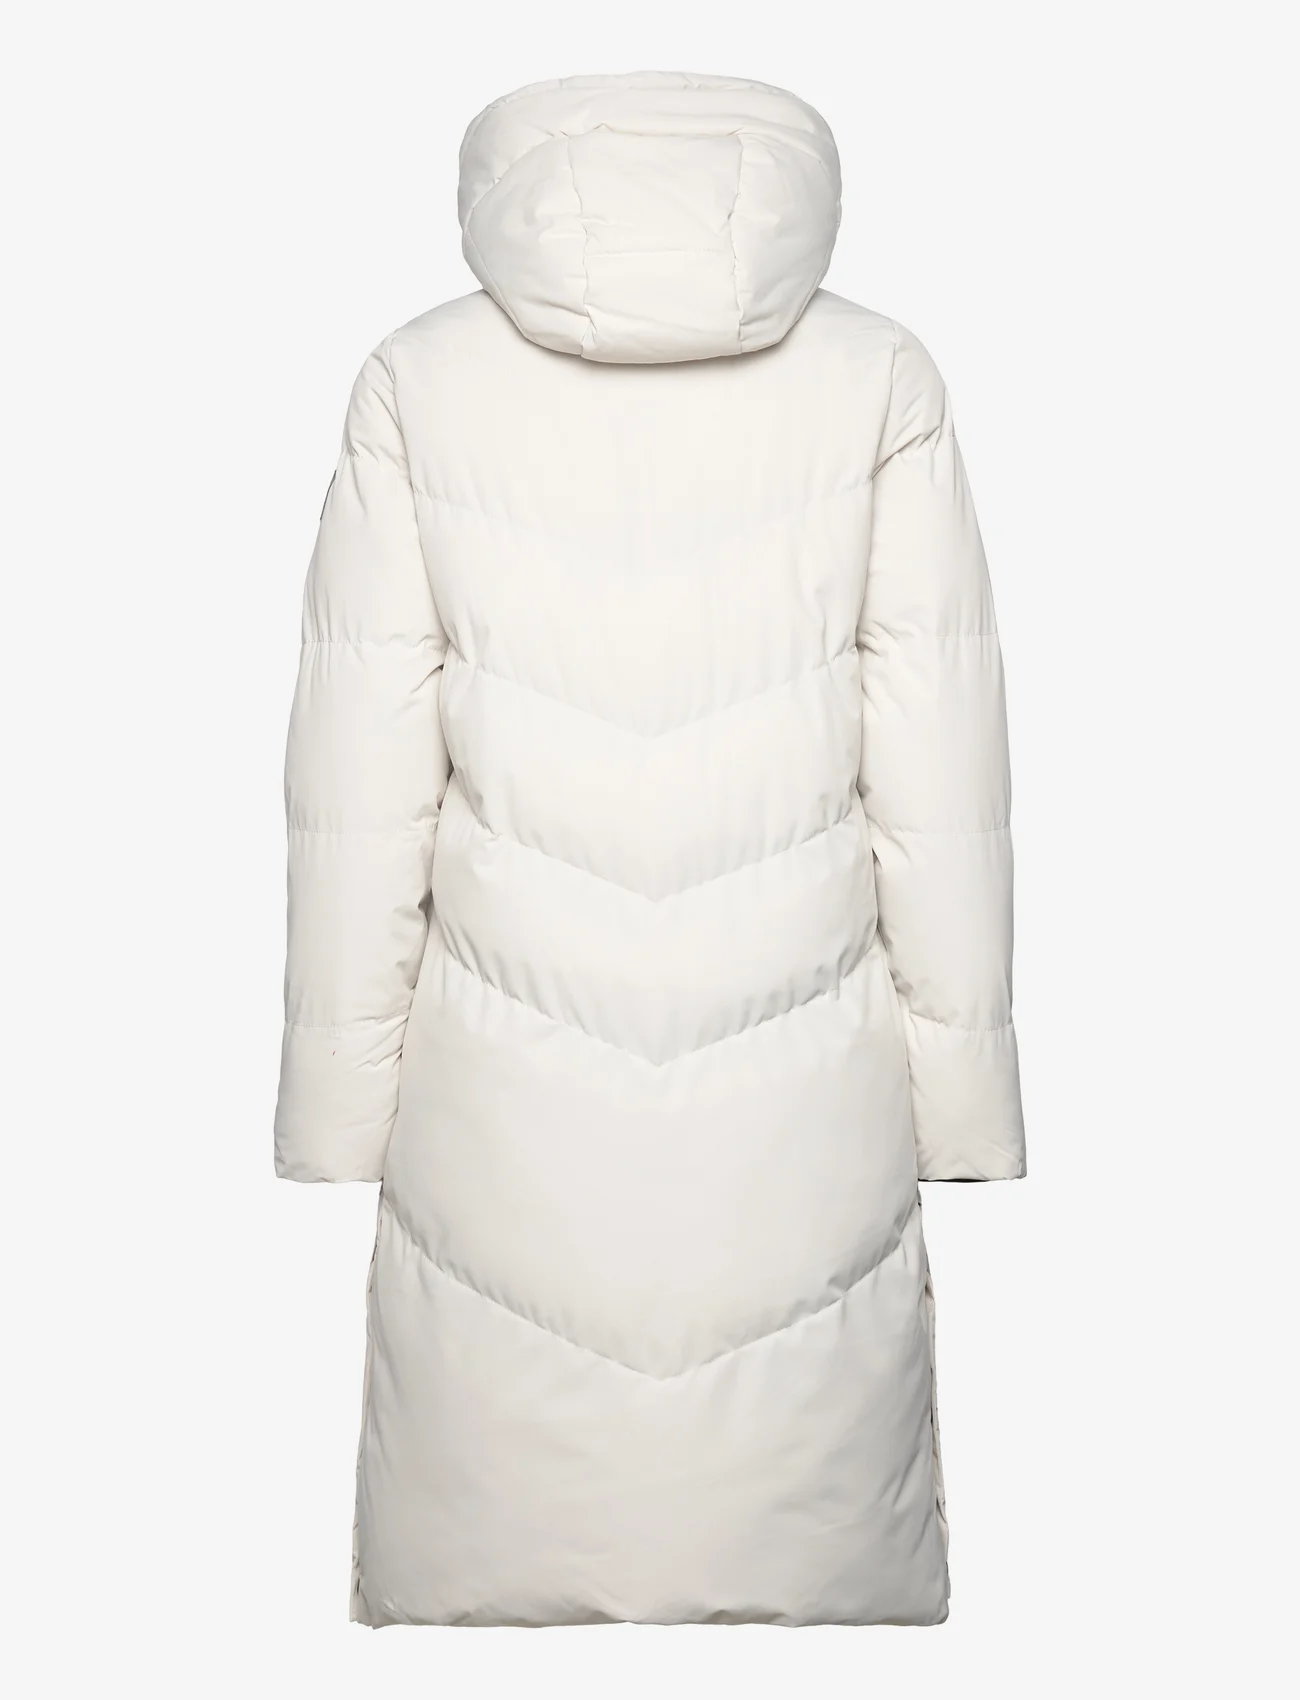 Garcia - ladies outdoor jackets - vinterjackor - cream - 1